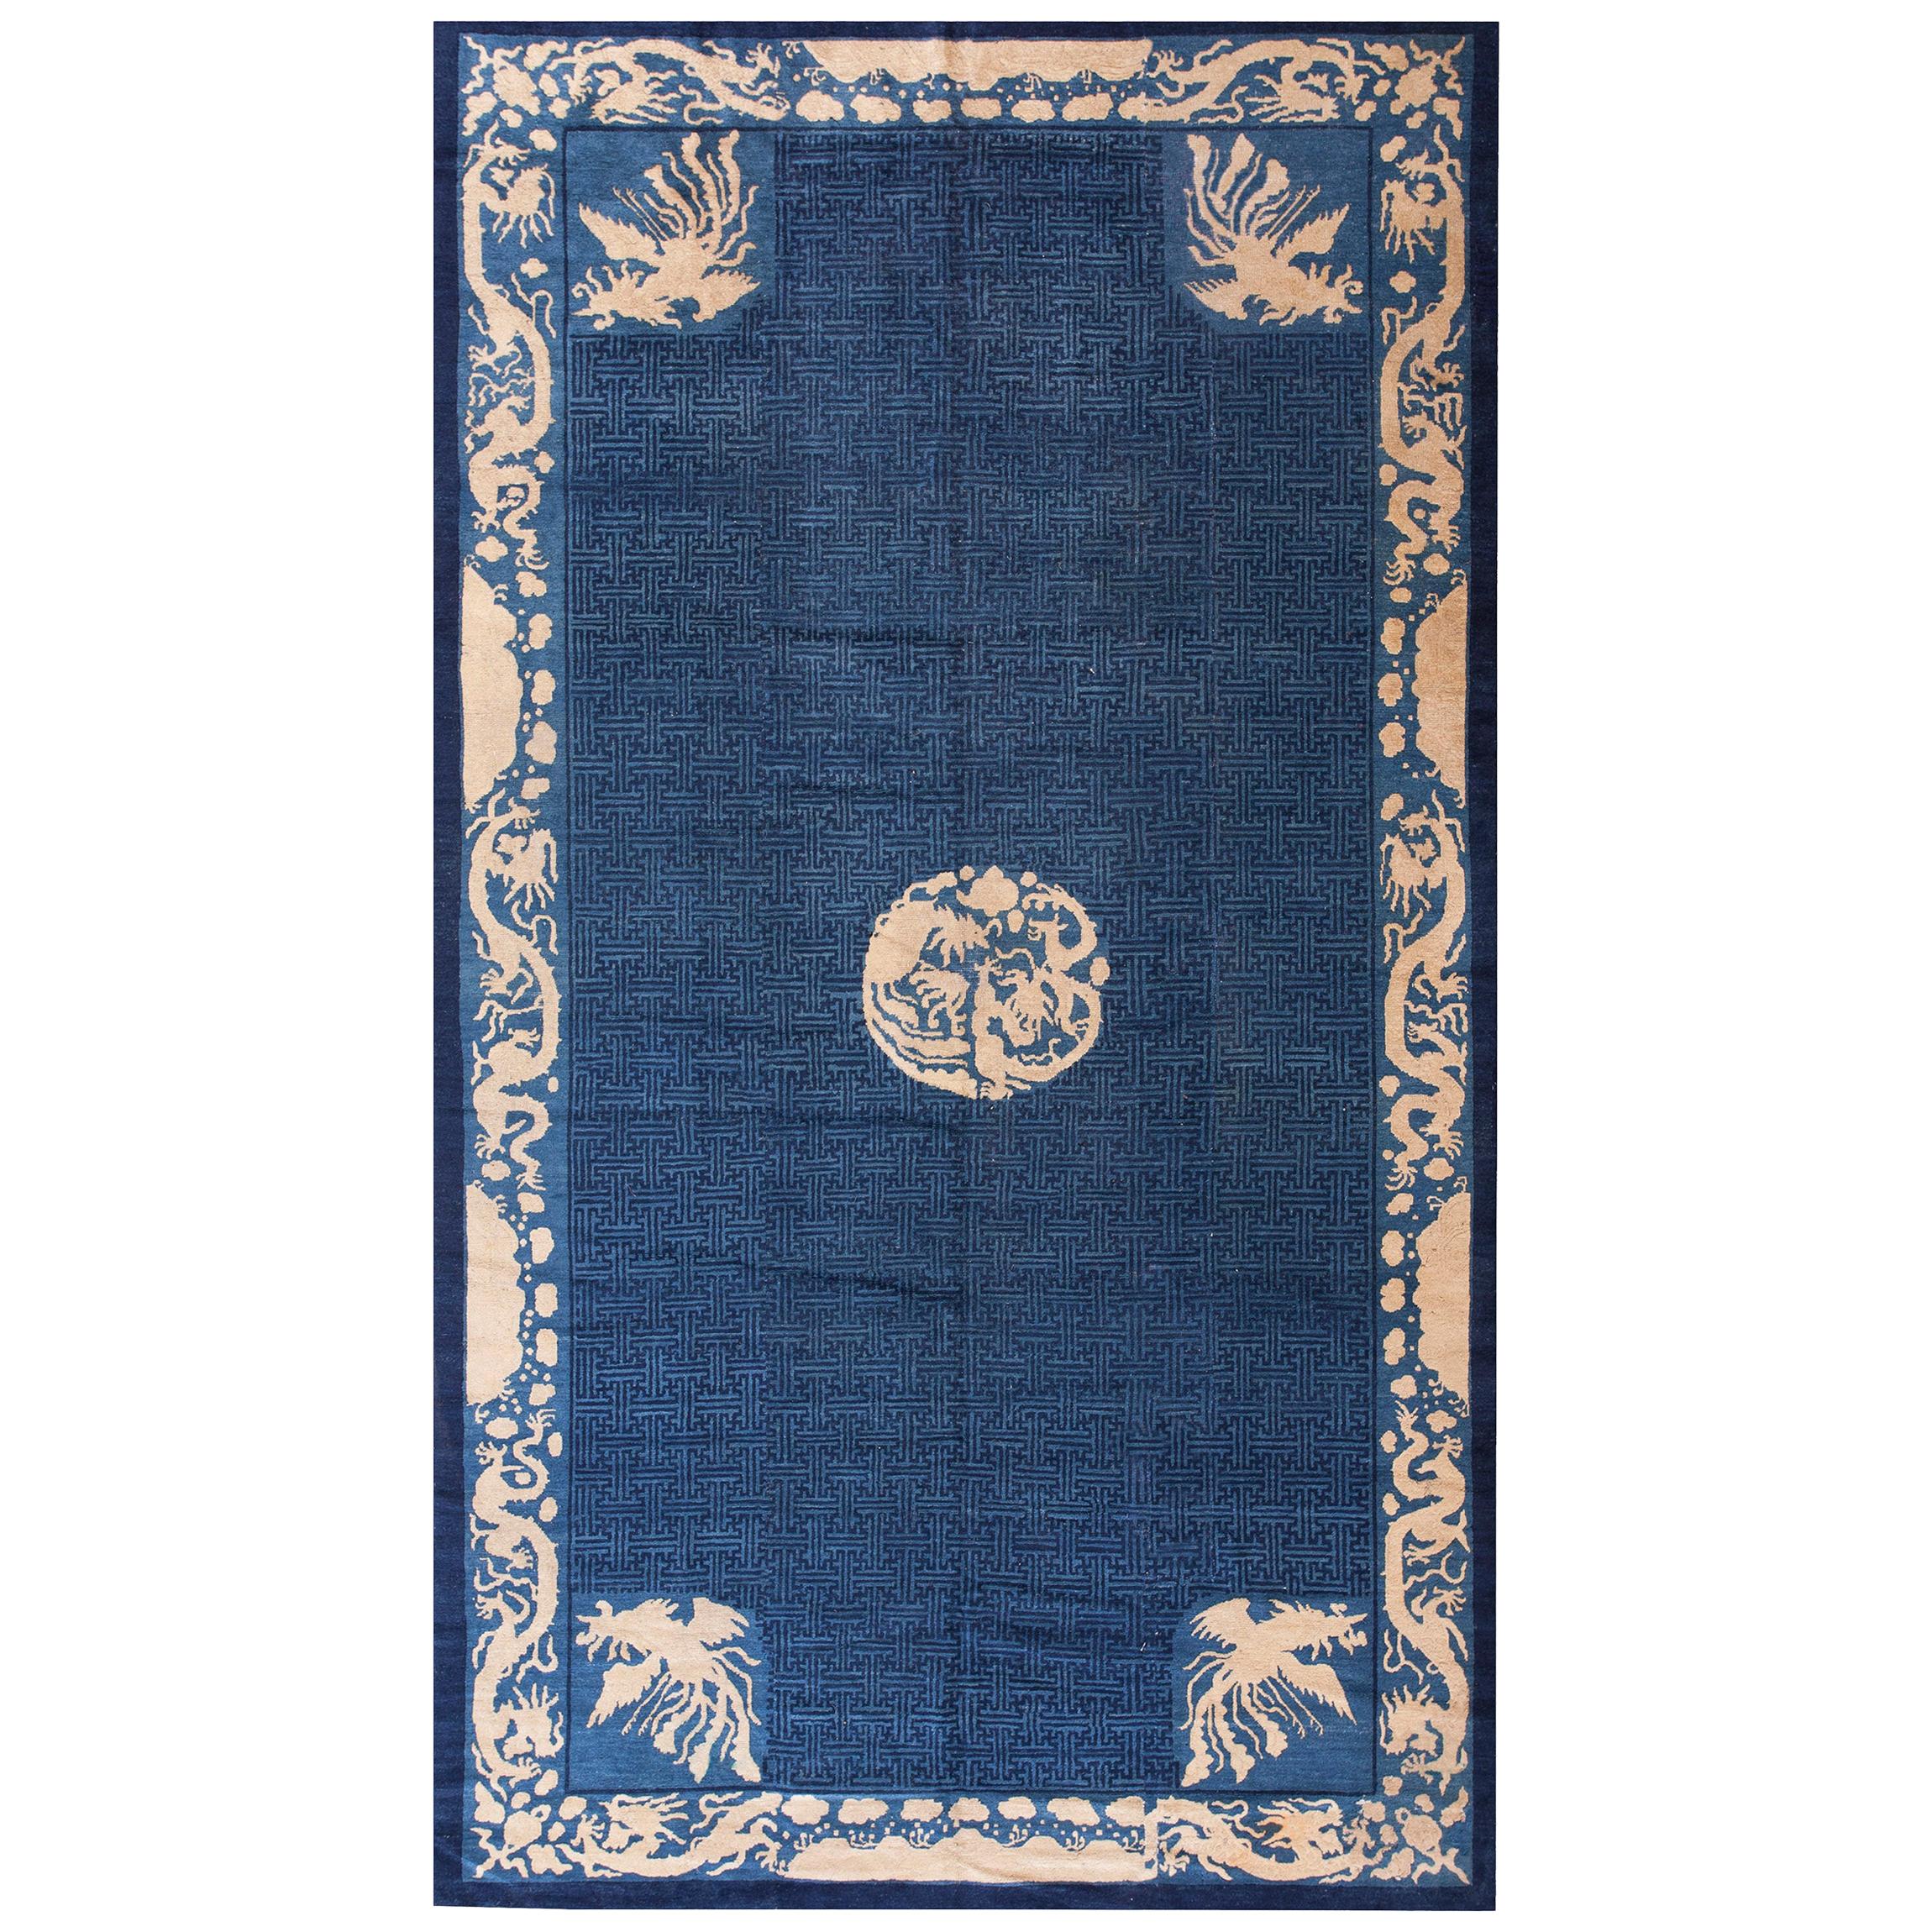 19th Century Chinese Peking Carpet ( 6'6" x 11'9" - 198 x 358 ) For Sale